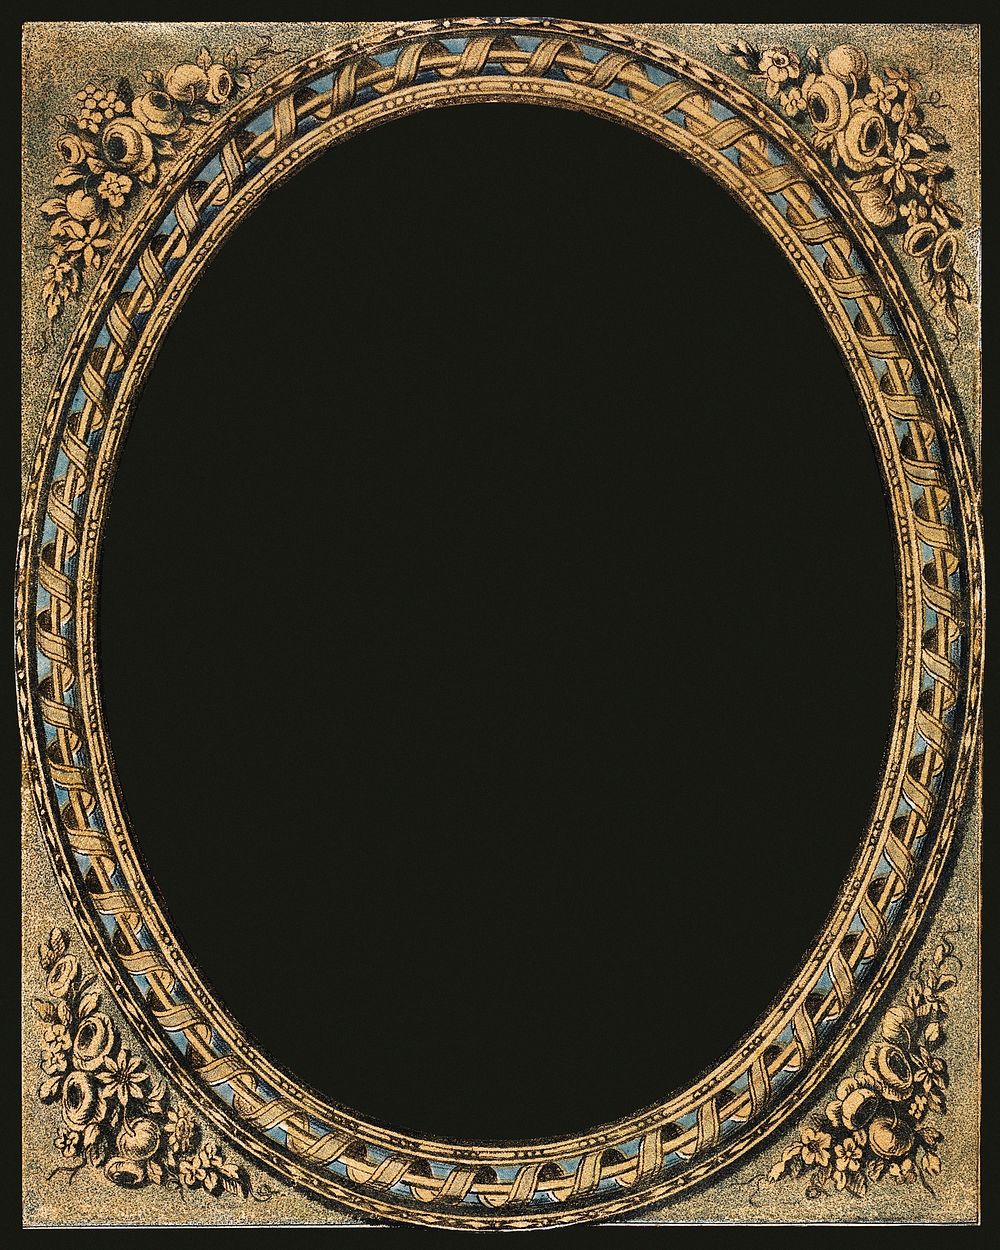 Vintage gold oval frame, featuring public domain artworks